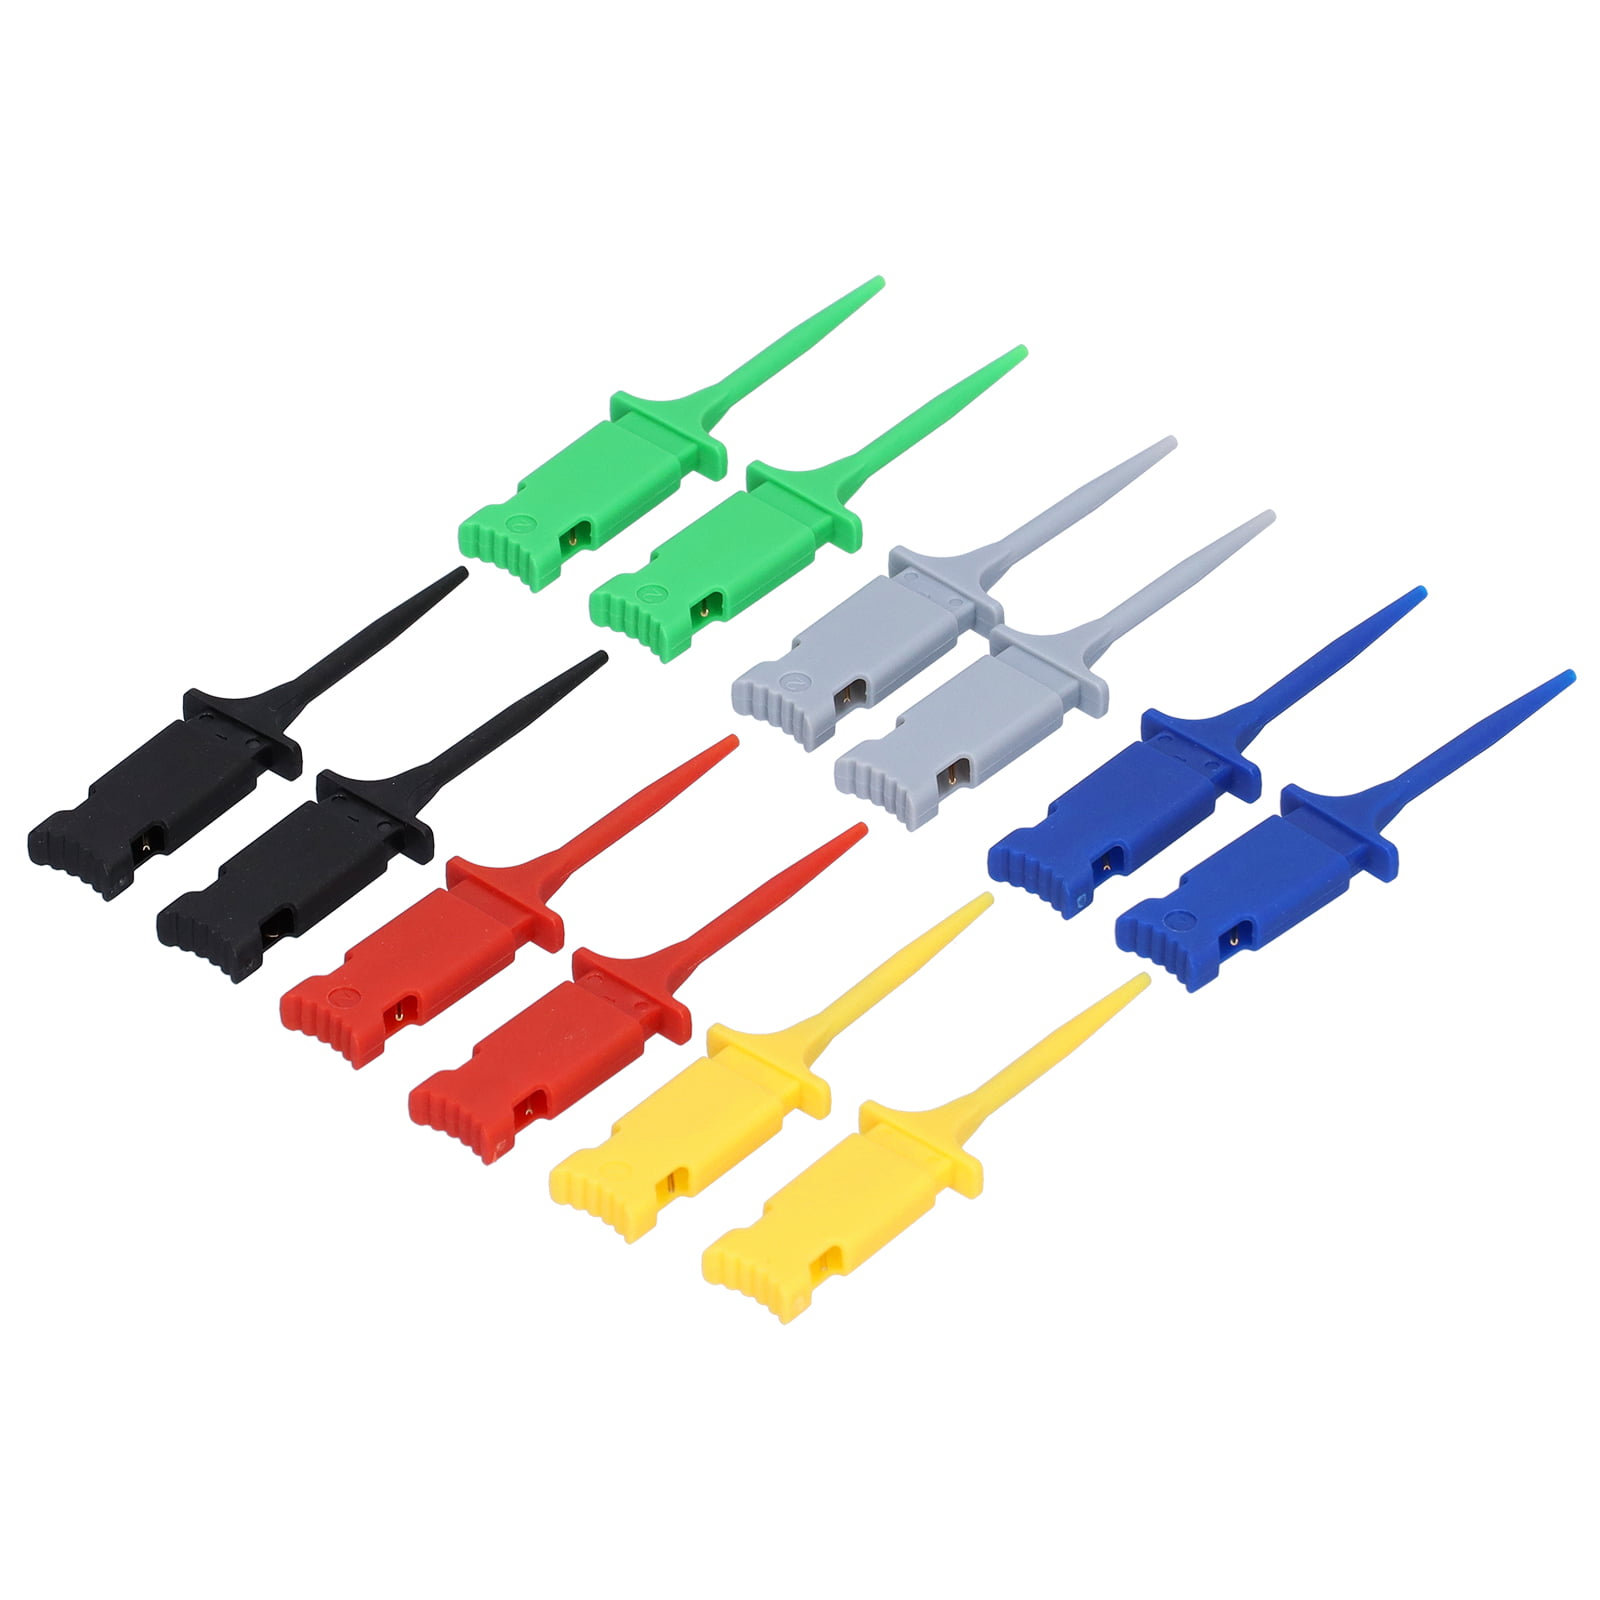 Mini Grabber SMD IC Test Hook Clip Jumper Probe for Logical Analyzer 6 Colors 